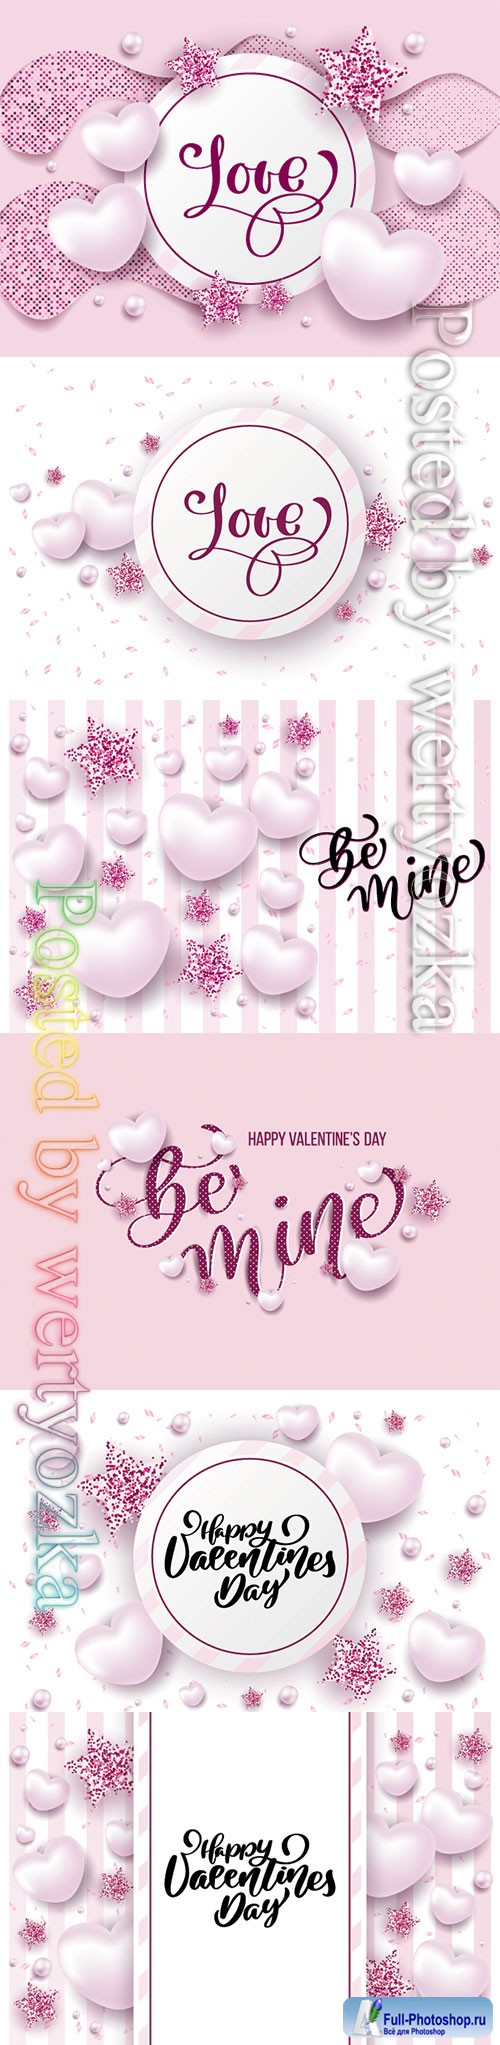 Happy valentine day festive sparkle layout template design